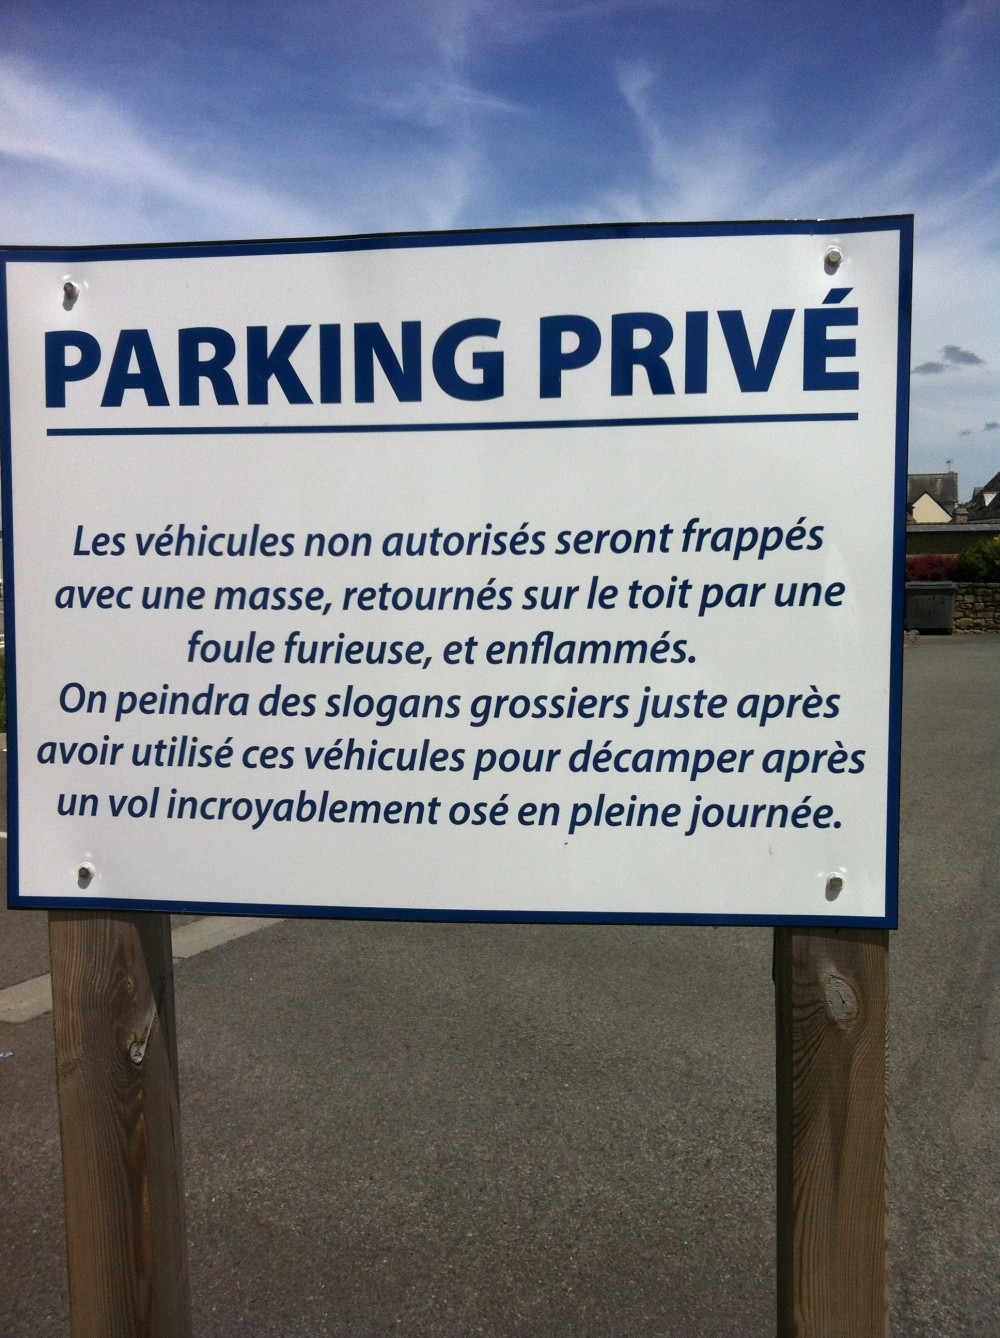 Parking prive humour